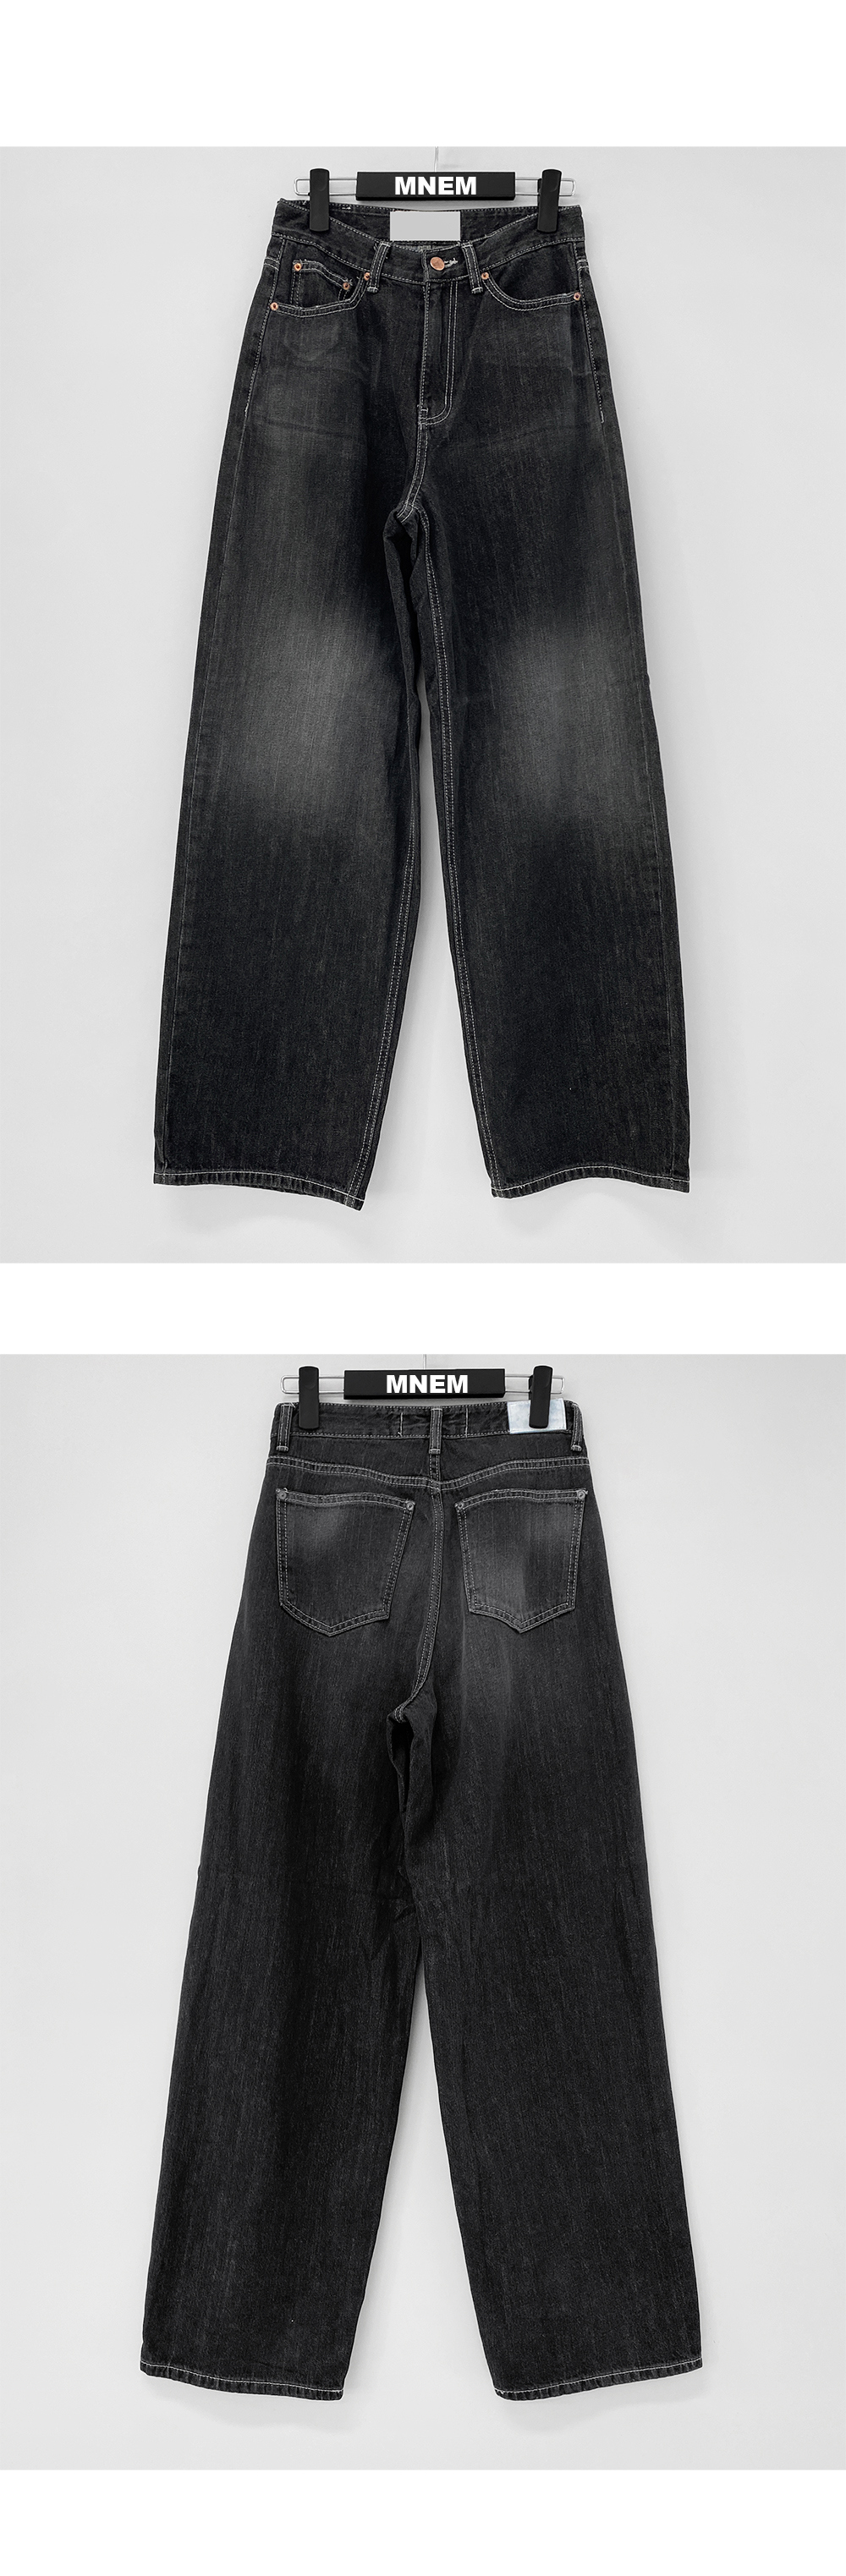 suspenders skirt/pants charcoal color image-S1L13